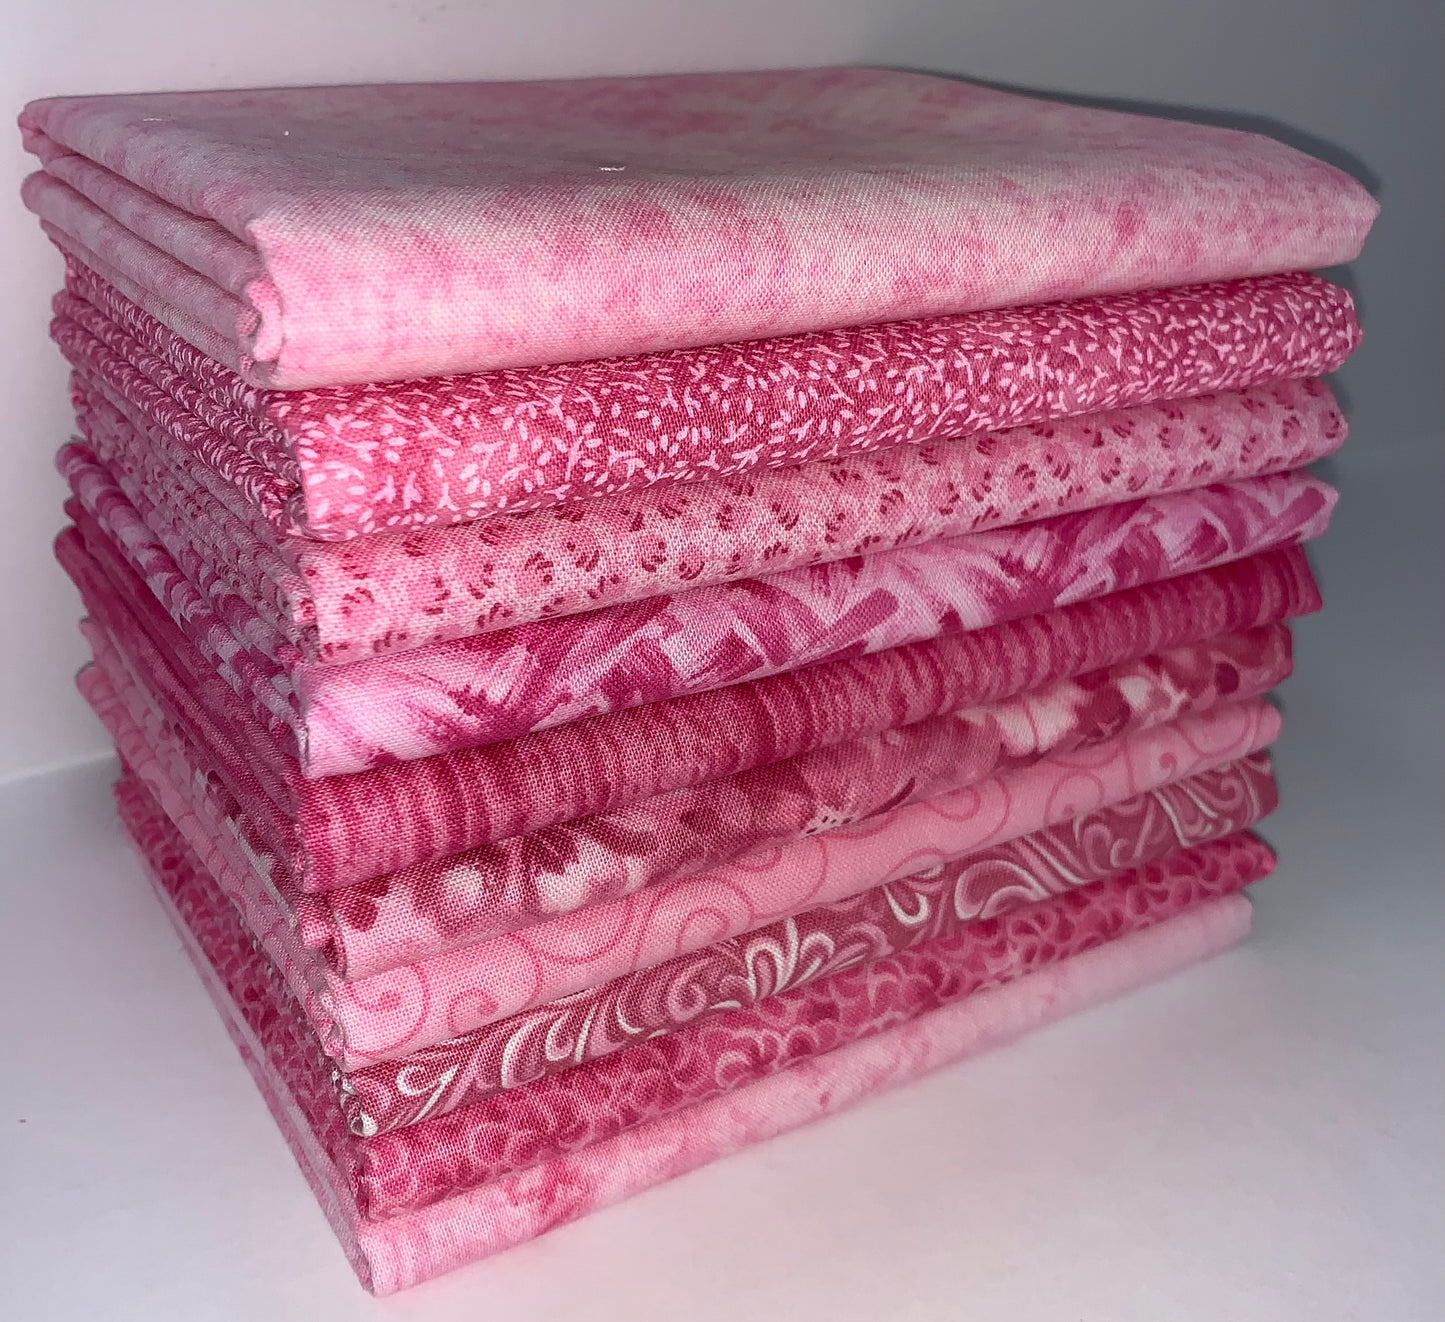 Basic Colors - Pink Half-Yard Bundle - 10 Fabrics, 5 Total Yards